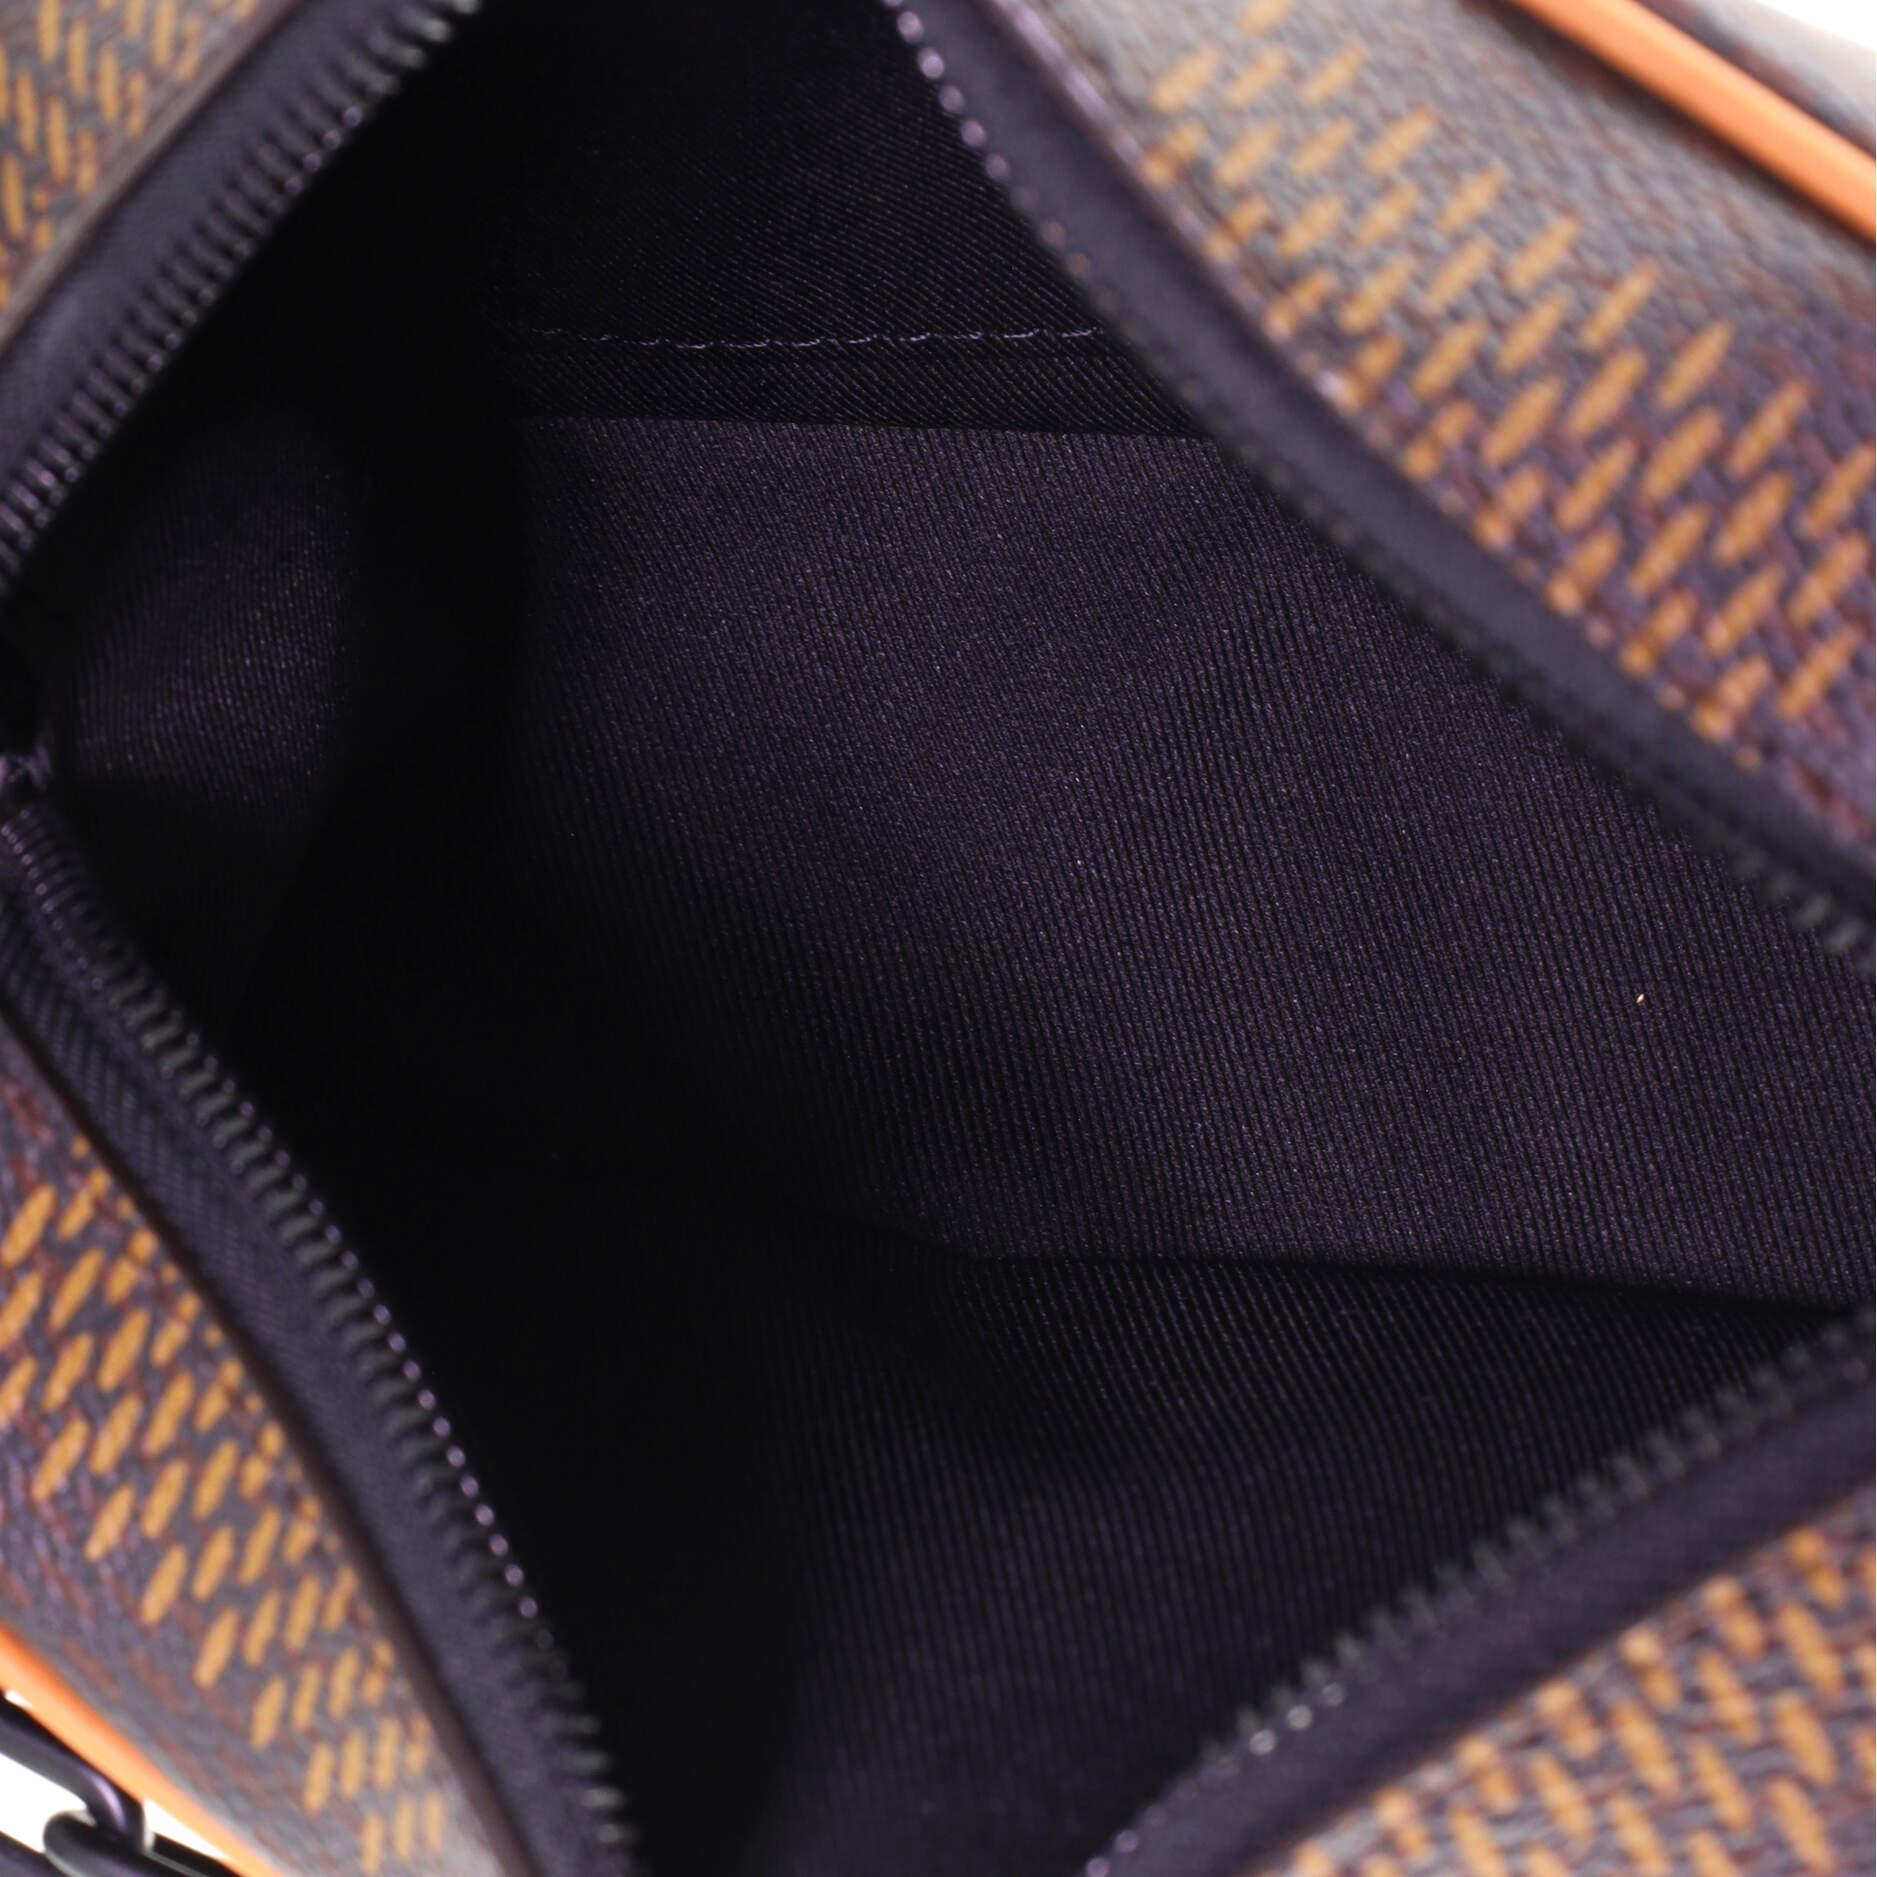 Black Louis Vuitton Nigo Soft Trunk Bag Limited Edition Giant Damier and Monogram